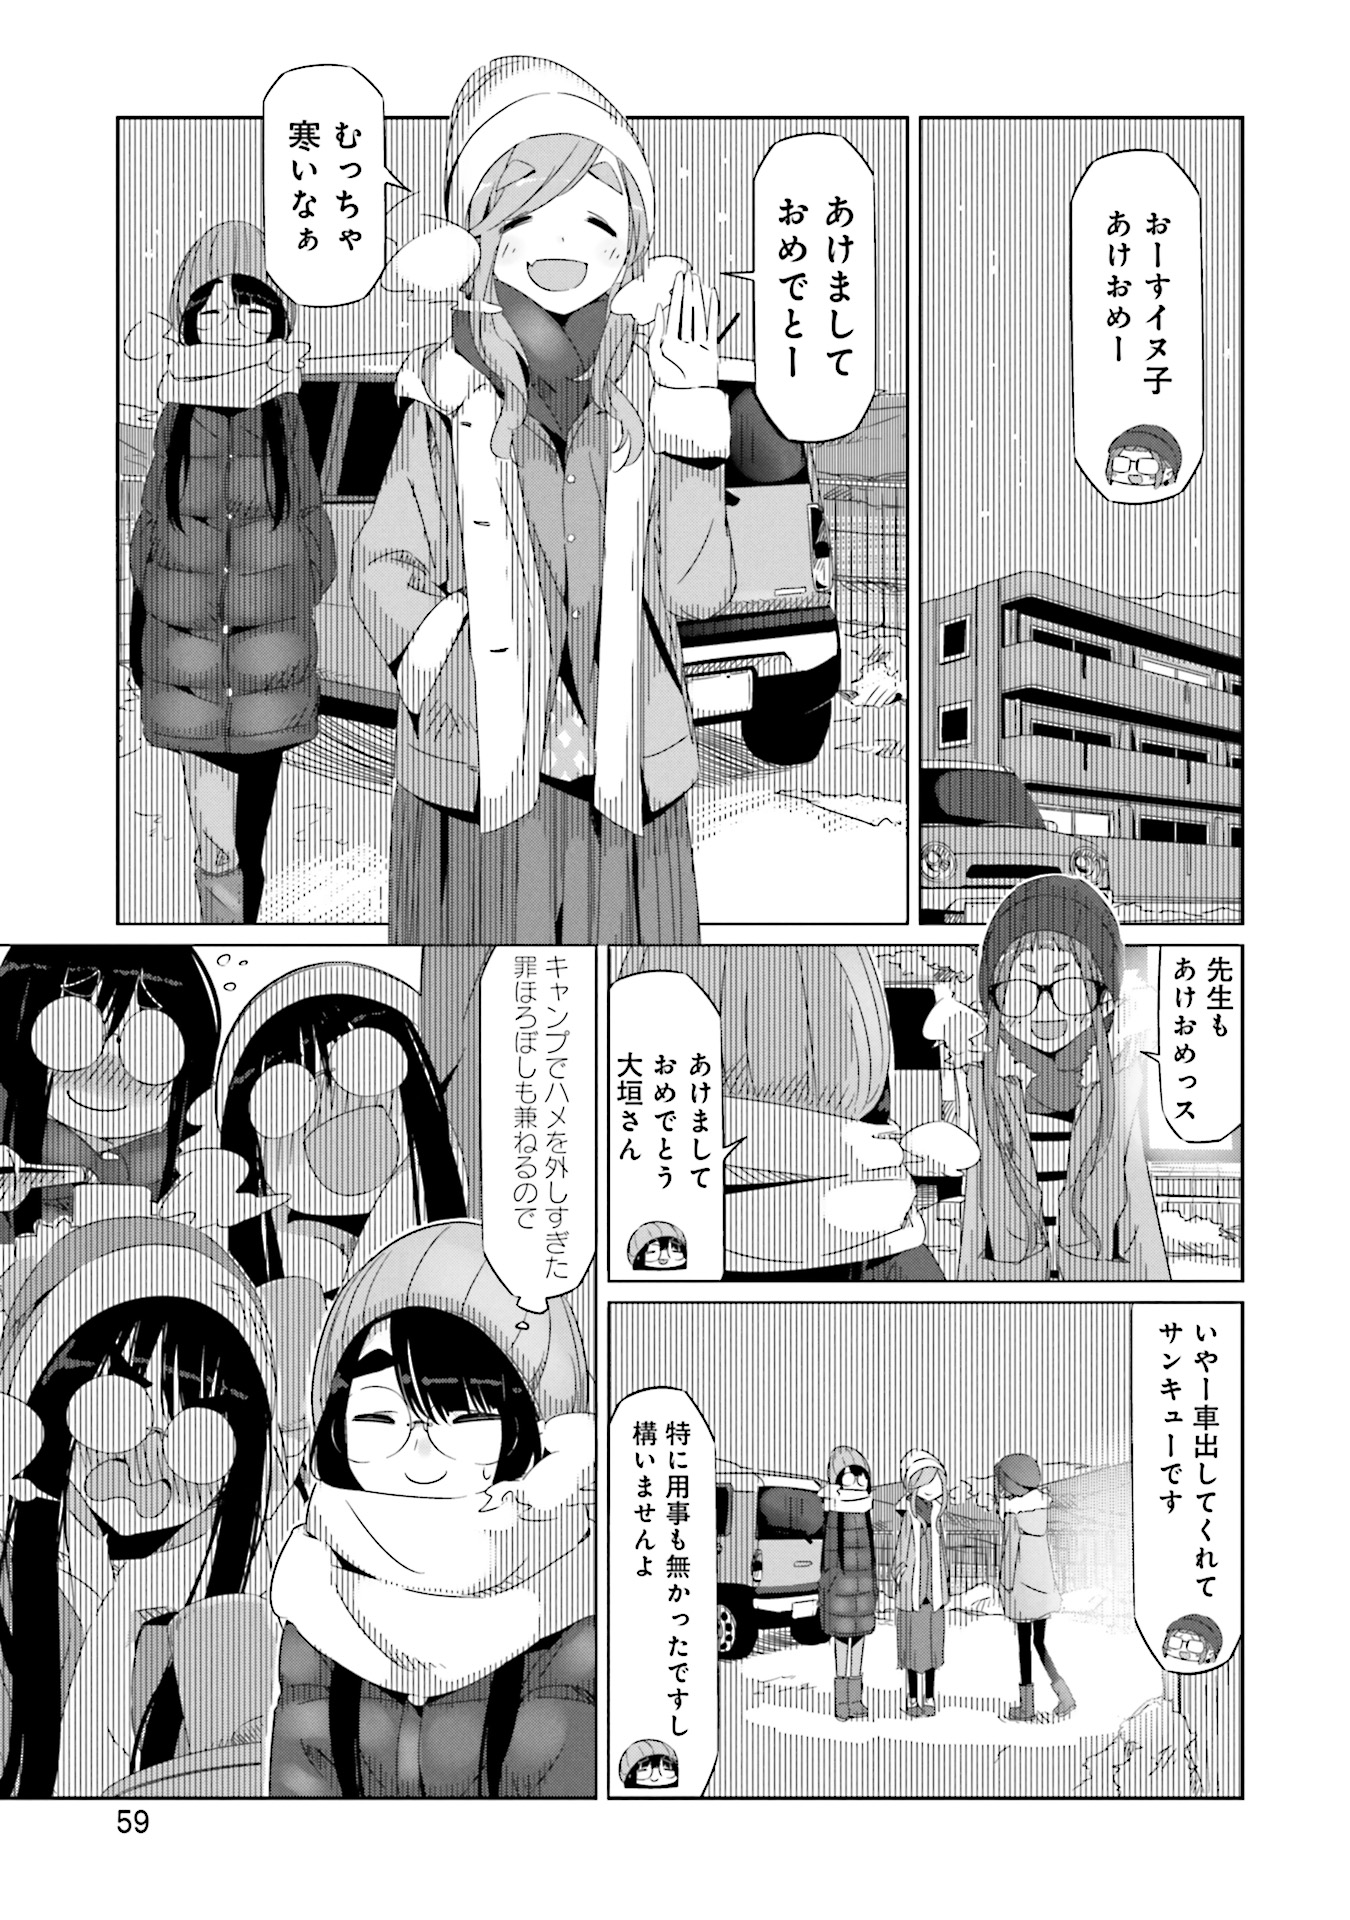 Yuru Camp - Chapter 26 - Page 1